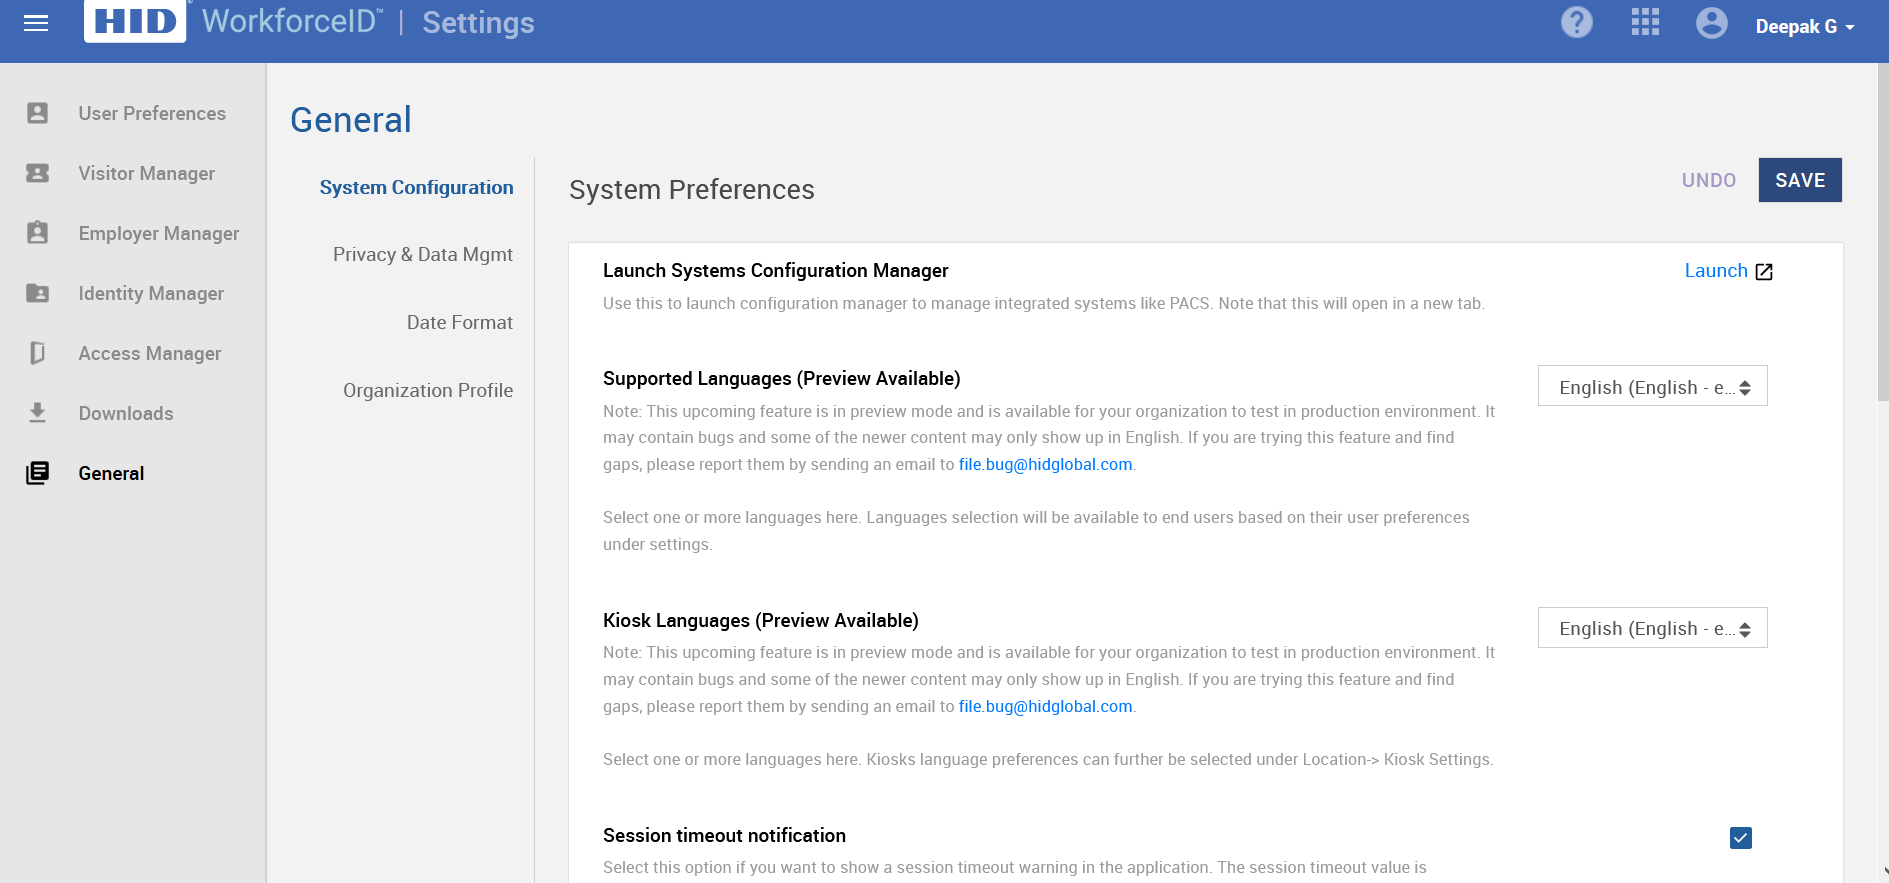 Configure language preferences, privacy preferences and organization details